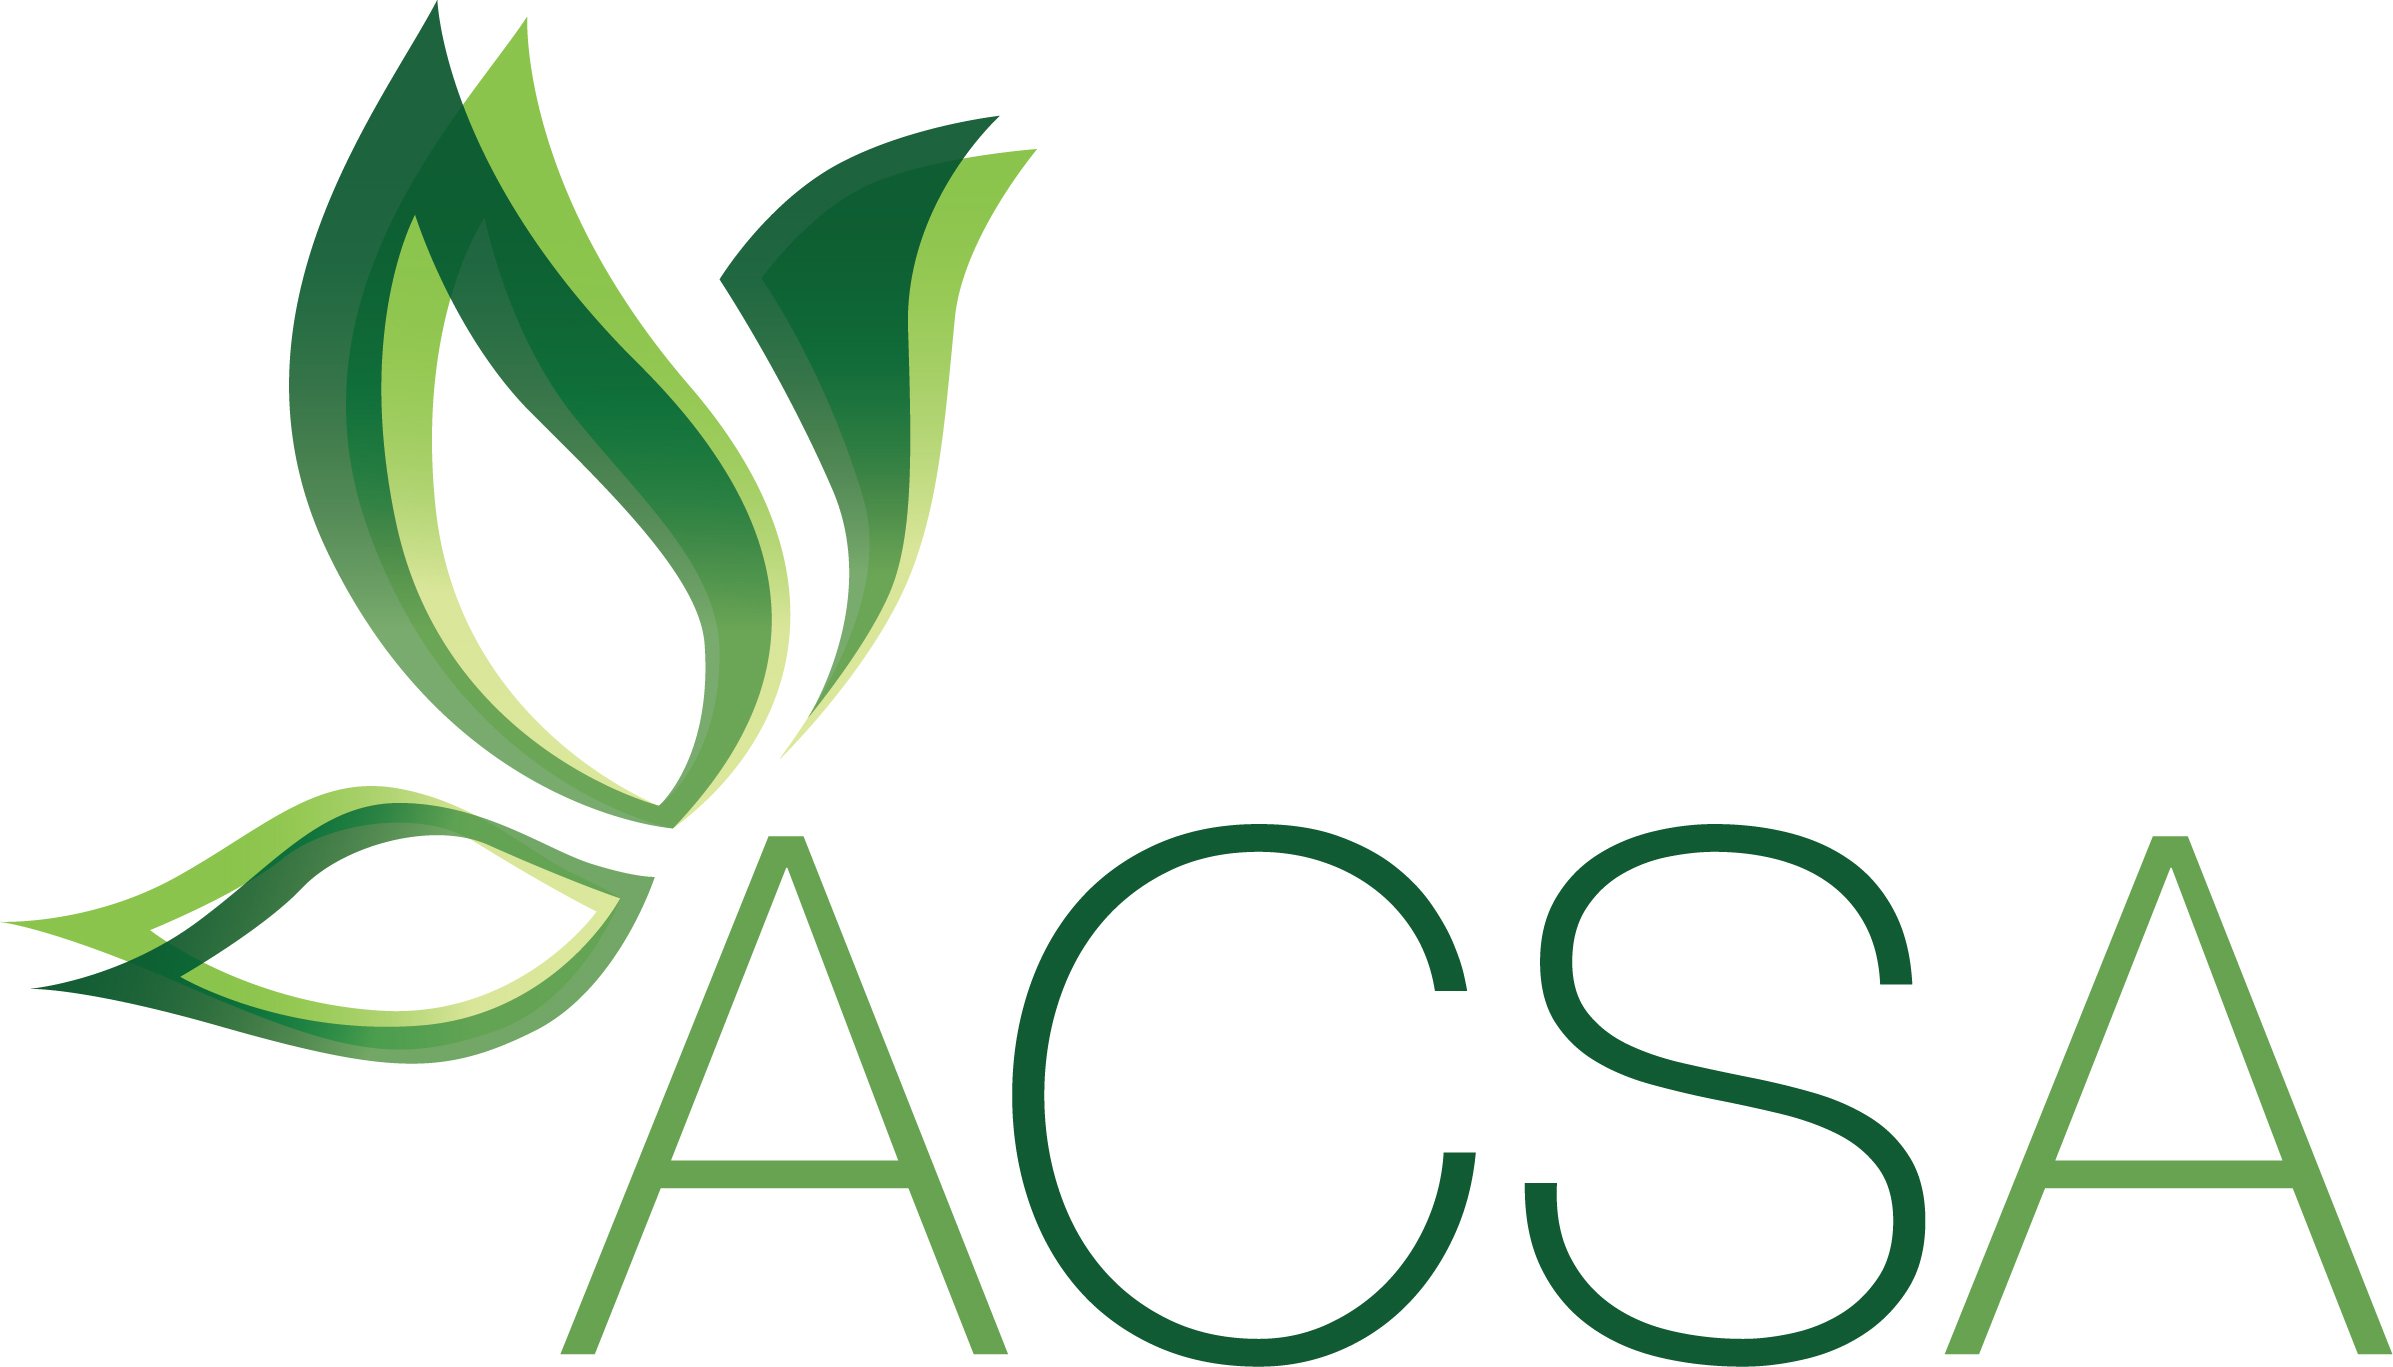 ACSA_logo jpg.jpeg